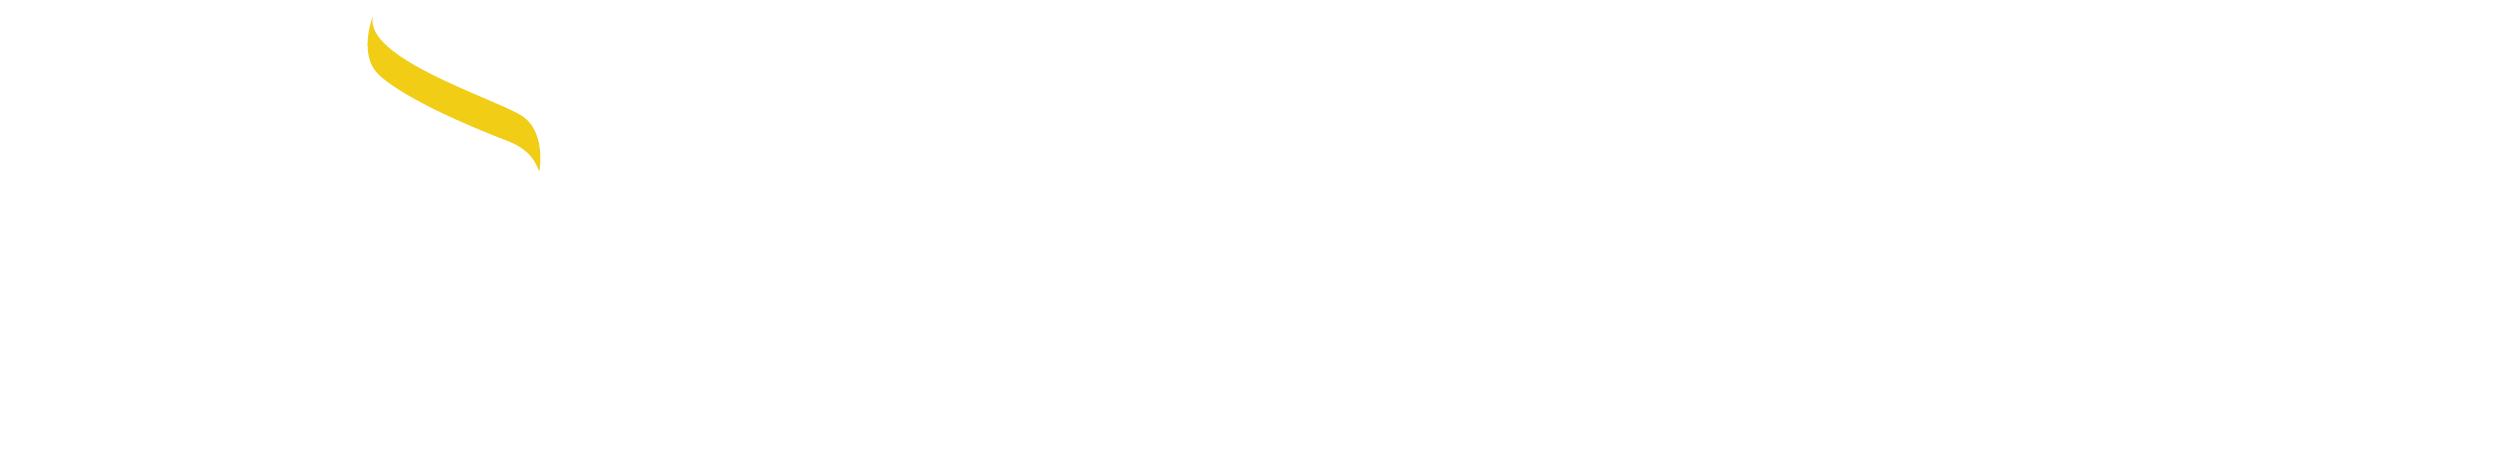 UMKC and IUE logos